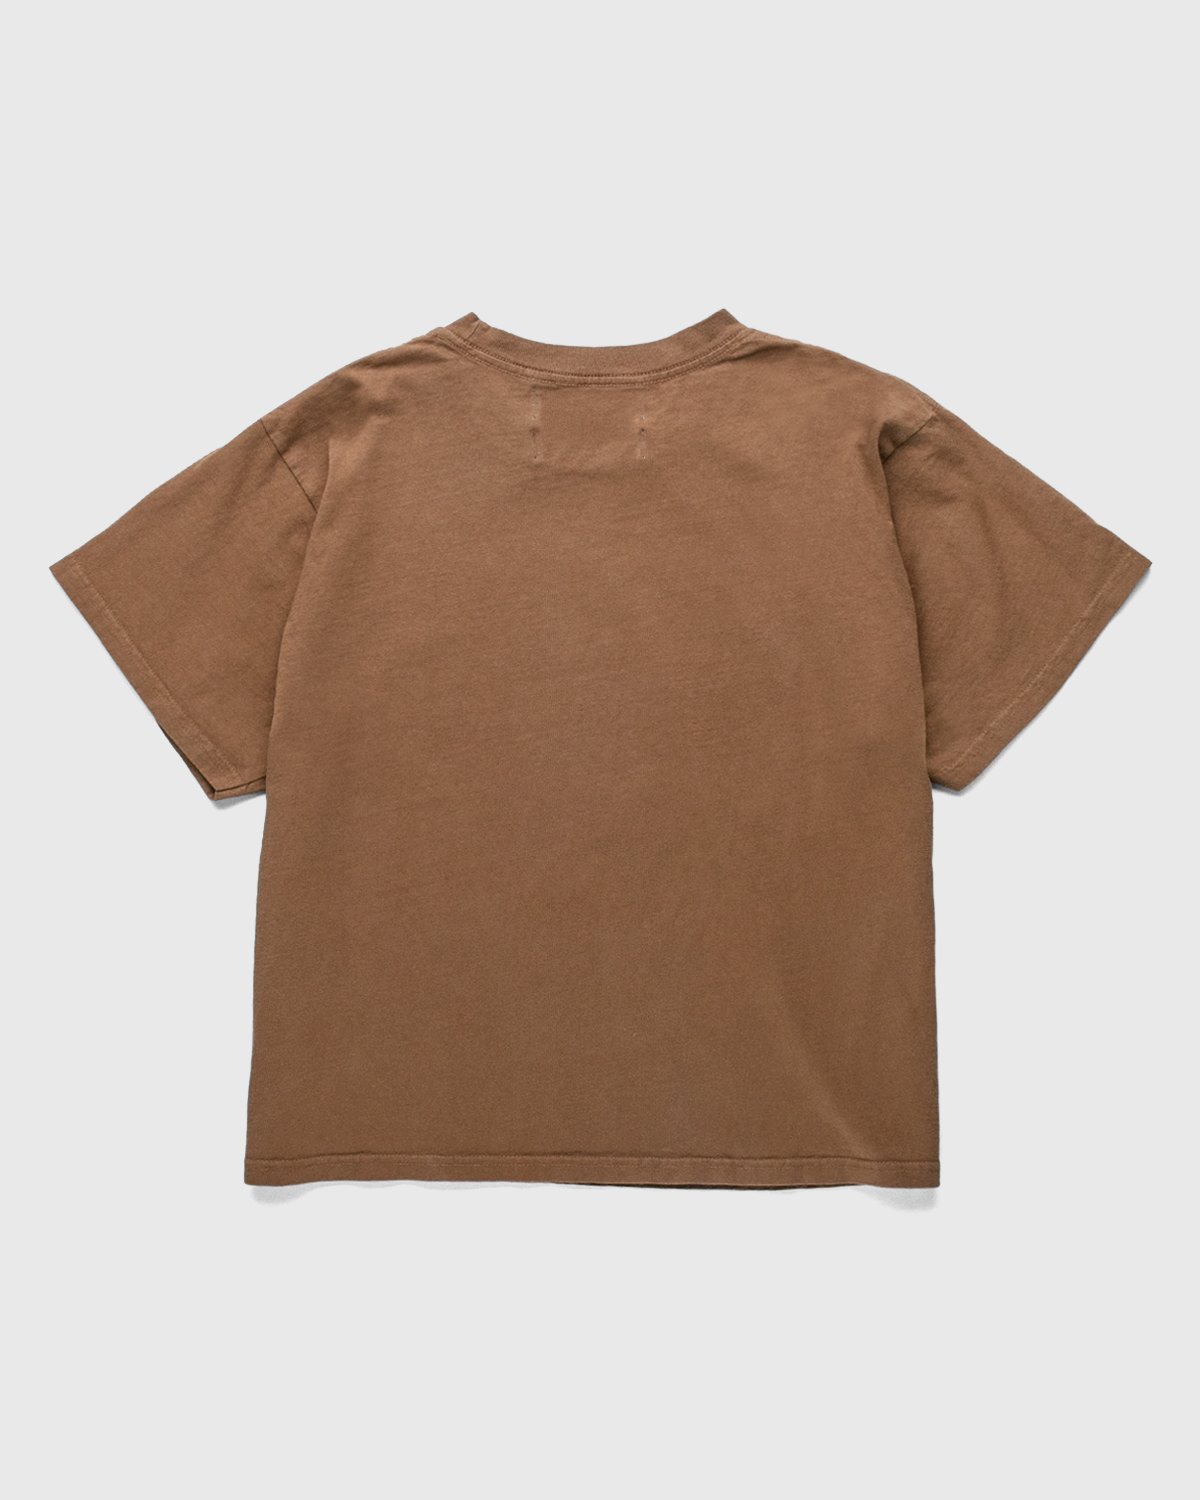 Darryl Brown - T-Shirt Coyote Brown - Clothing - Brown - Image 2